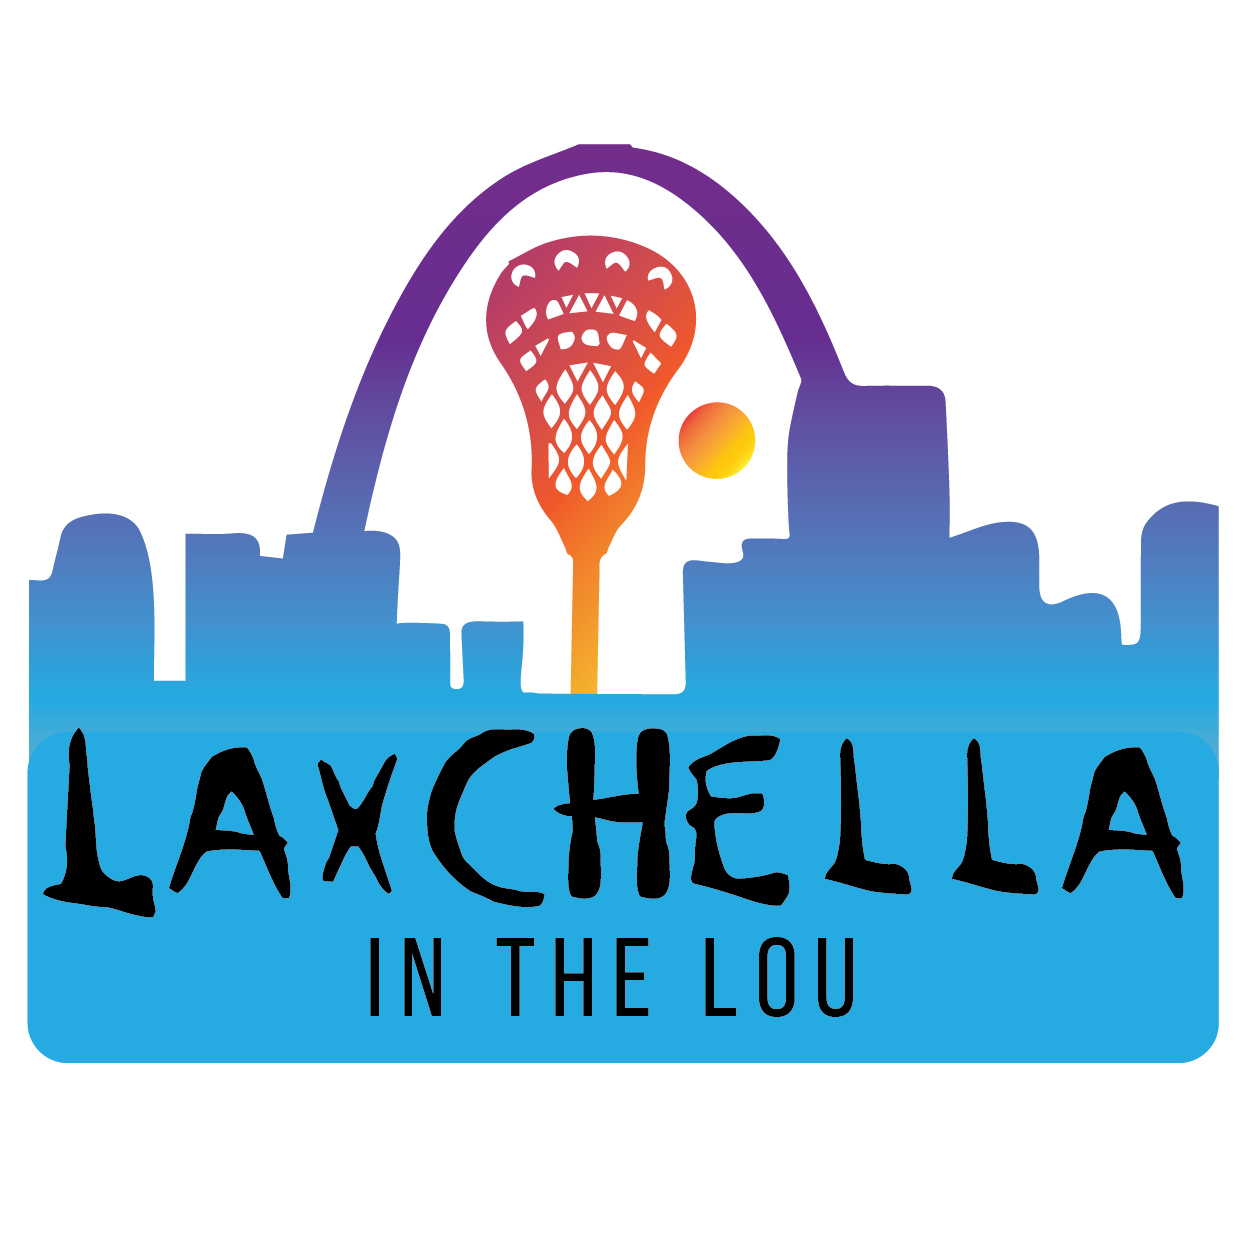 Laxchella better